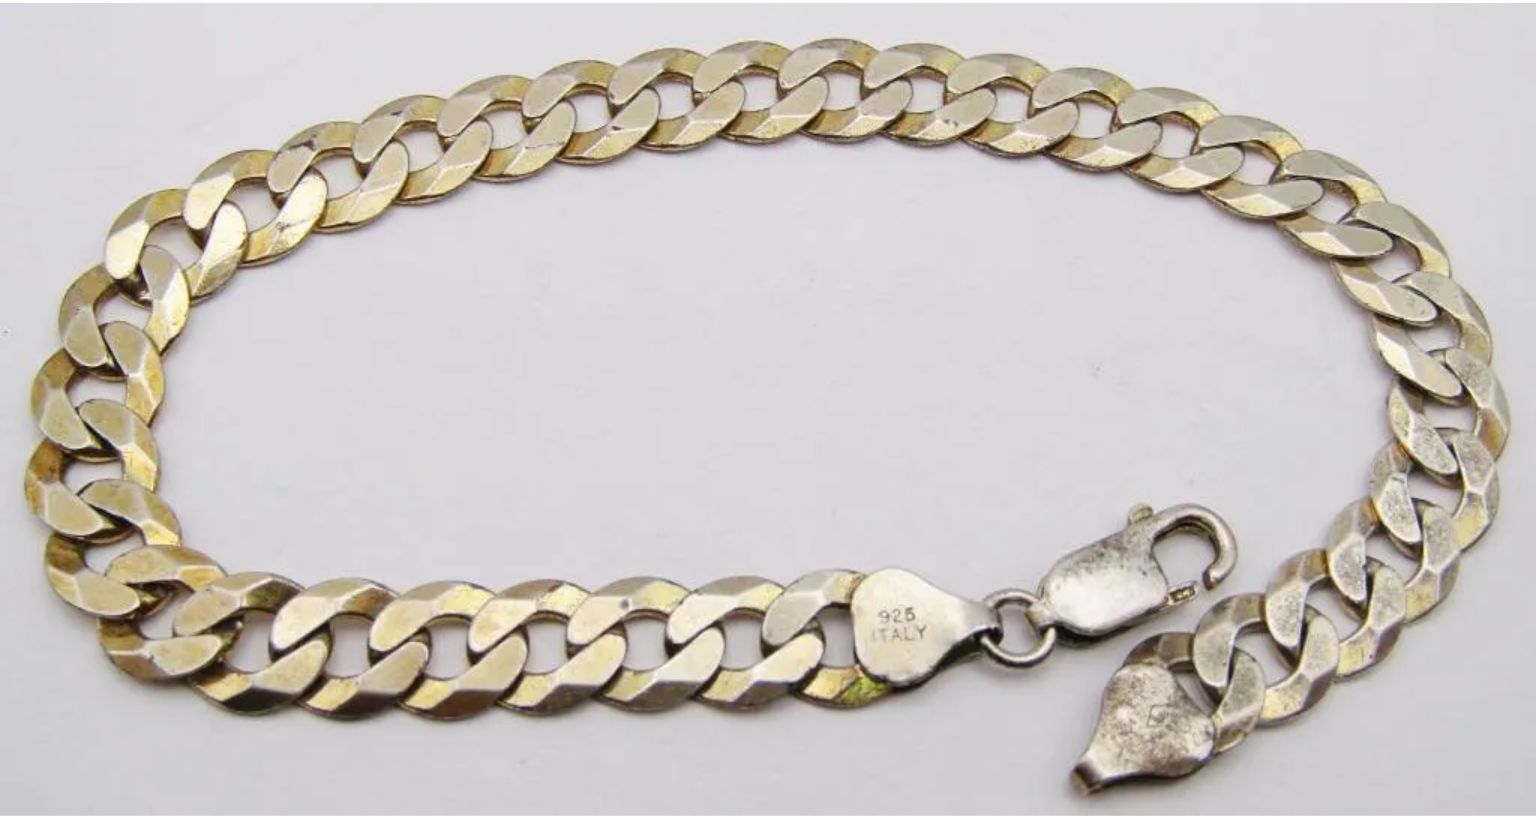 5.2mm .925 Sterling Silver Diamond-Cut Flat Figaro Chain Bracelet, 8 inches  - Walmart.com